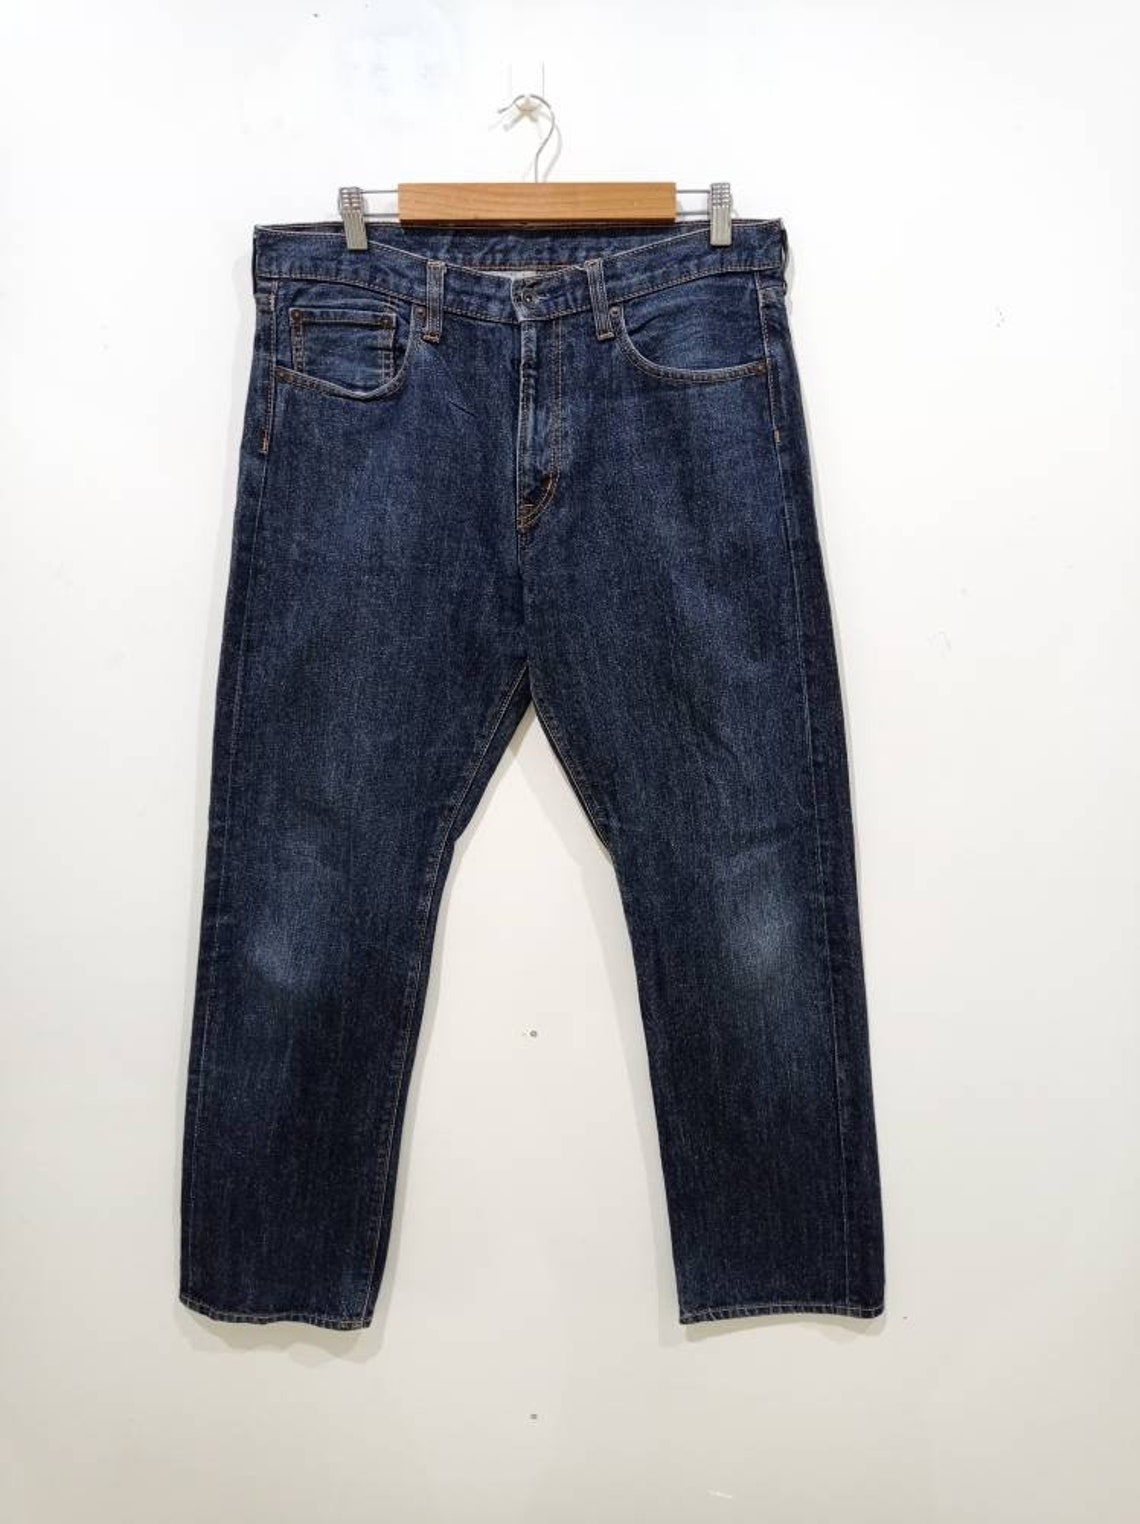 90s Japanese brand denim jeans W 33 L 30 | Etsy